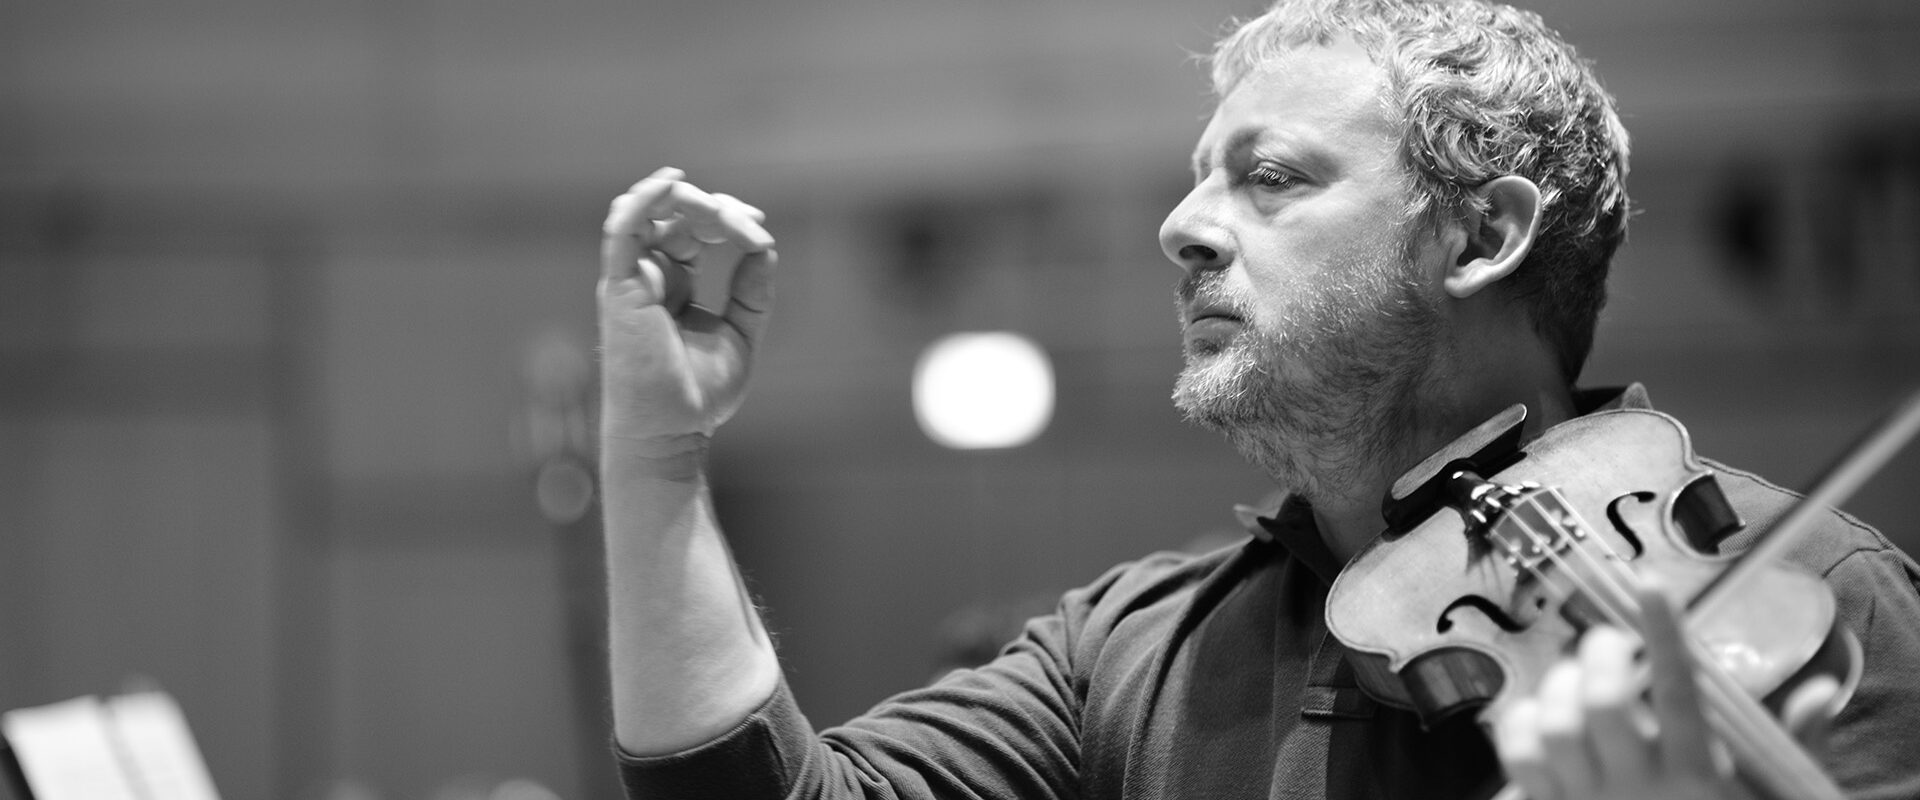 Fabio Biondi to conduct the end of season performance of “Halka” at the Podlasie Opera